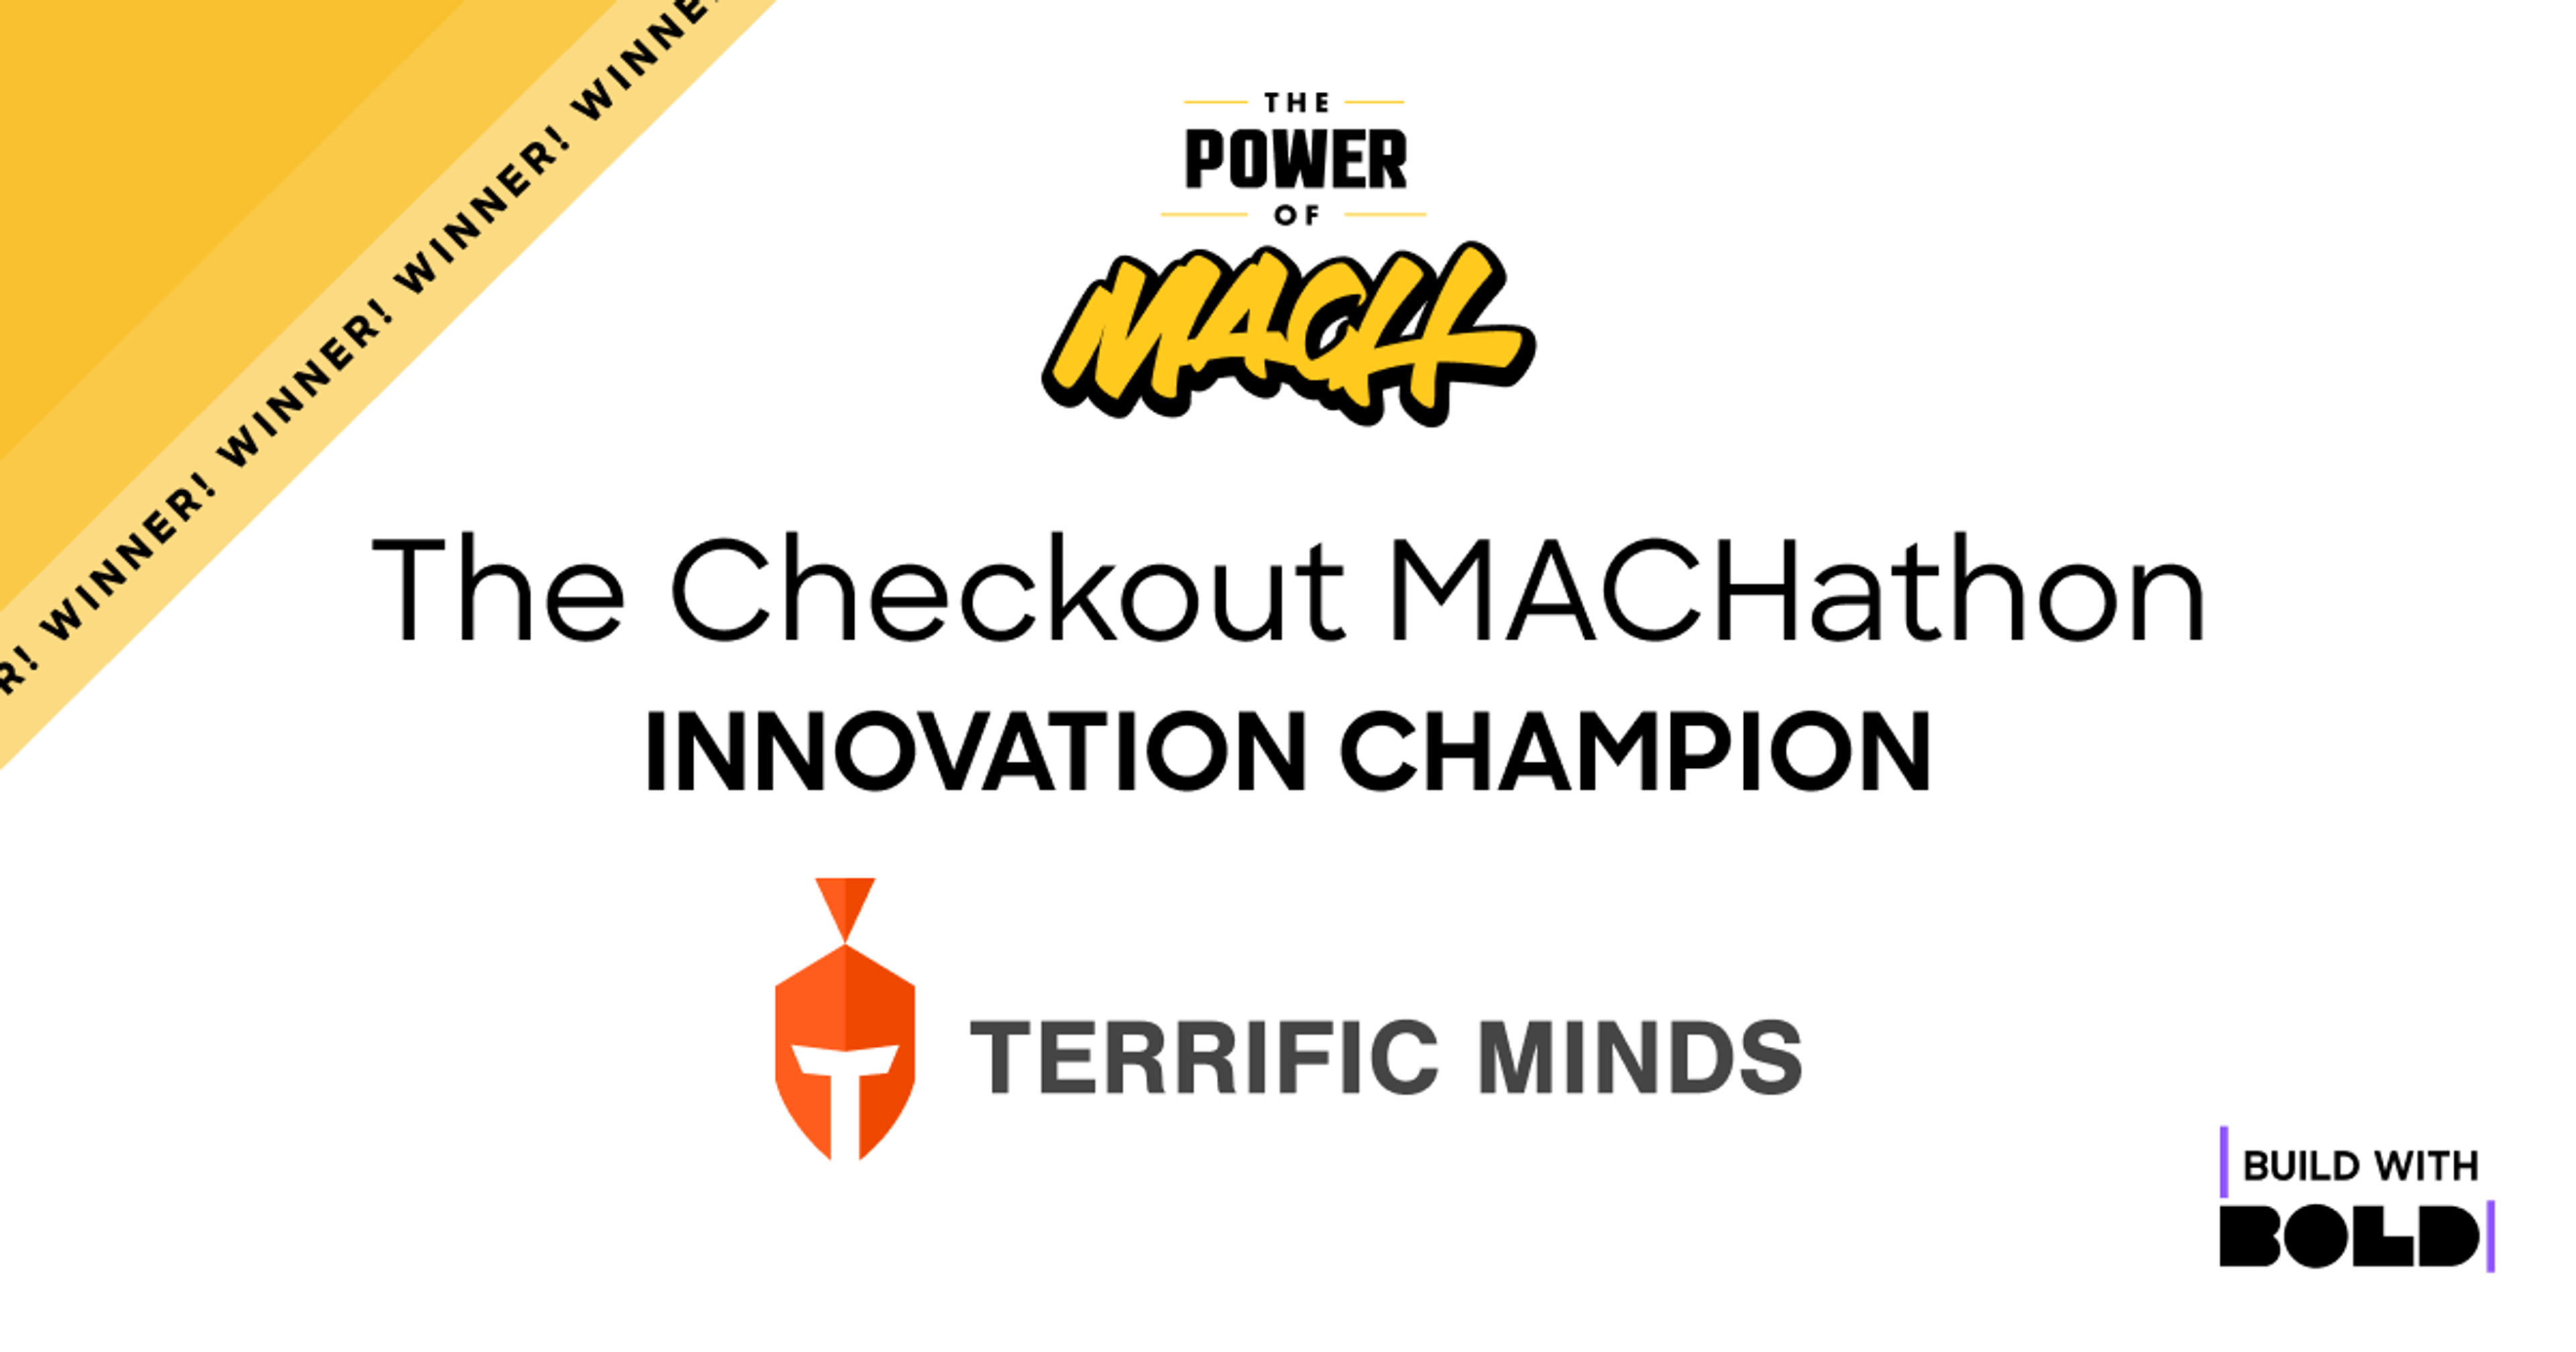 Terrific Minds: The Checkout Machathon Innovation Champion